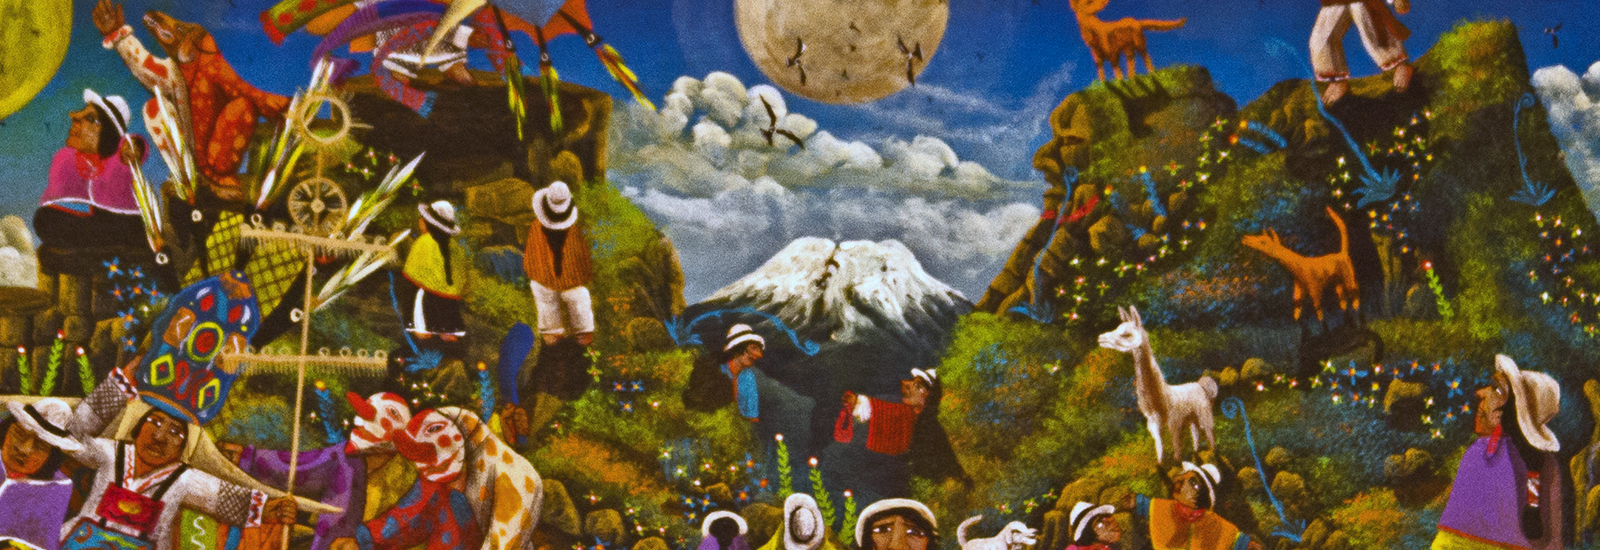 Tigua Painting by artist Cesar Ugsha, Cotopaxi Province, Ecuador